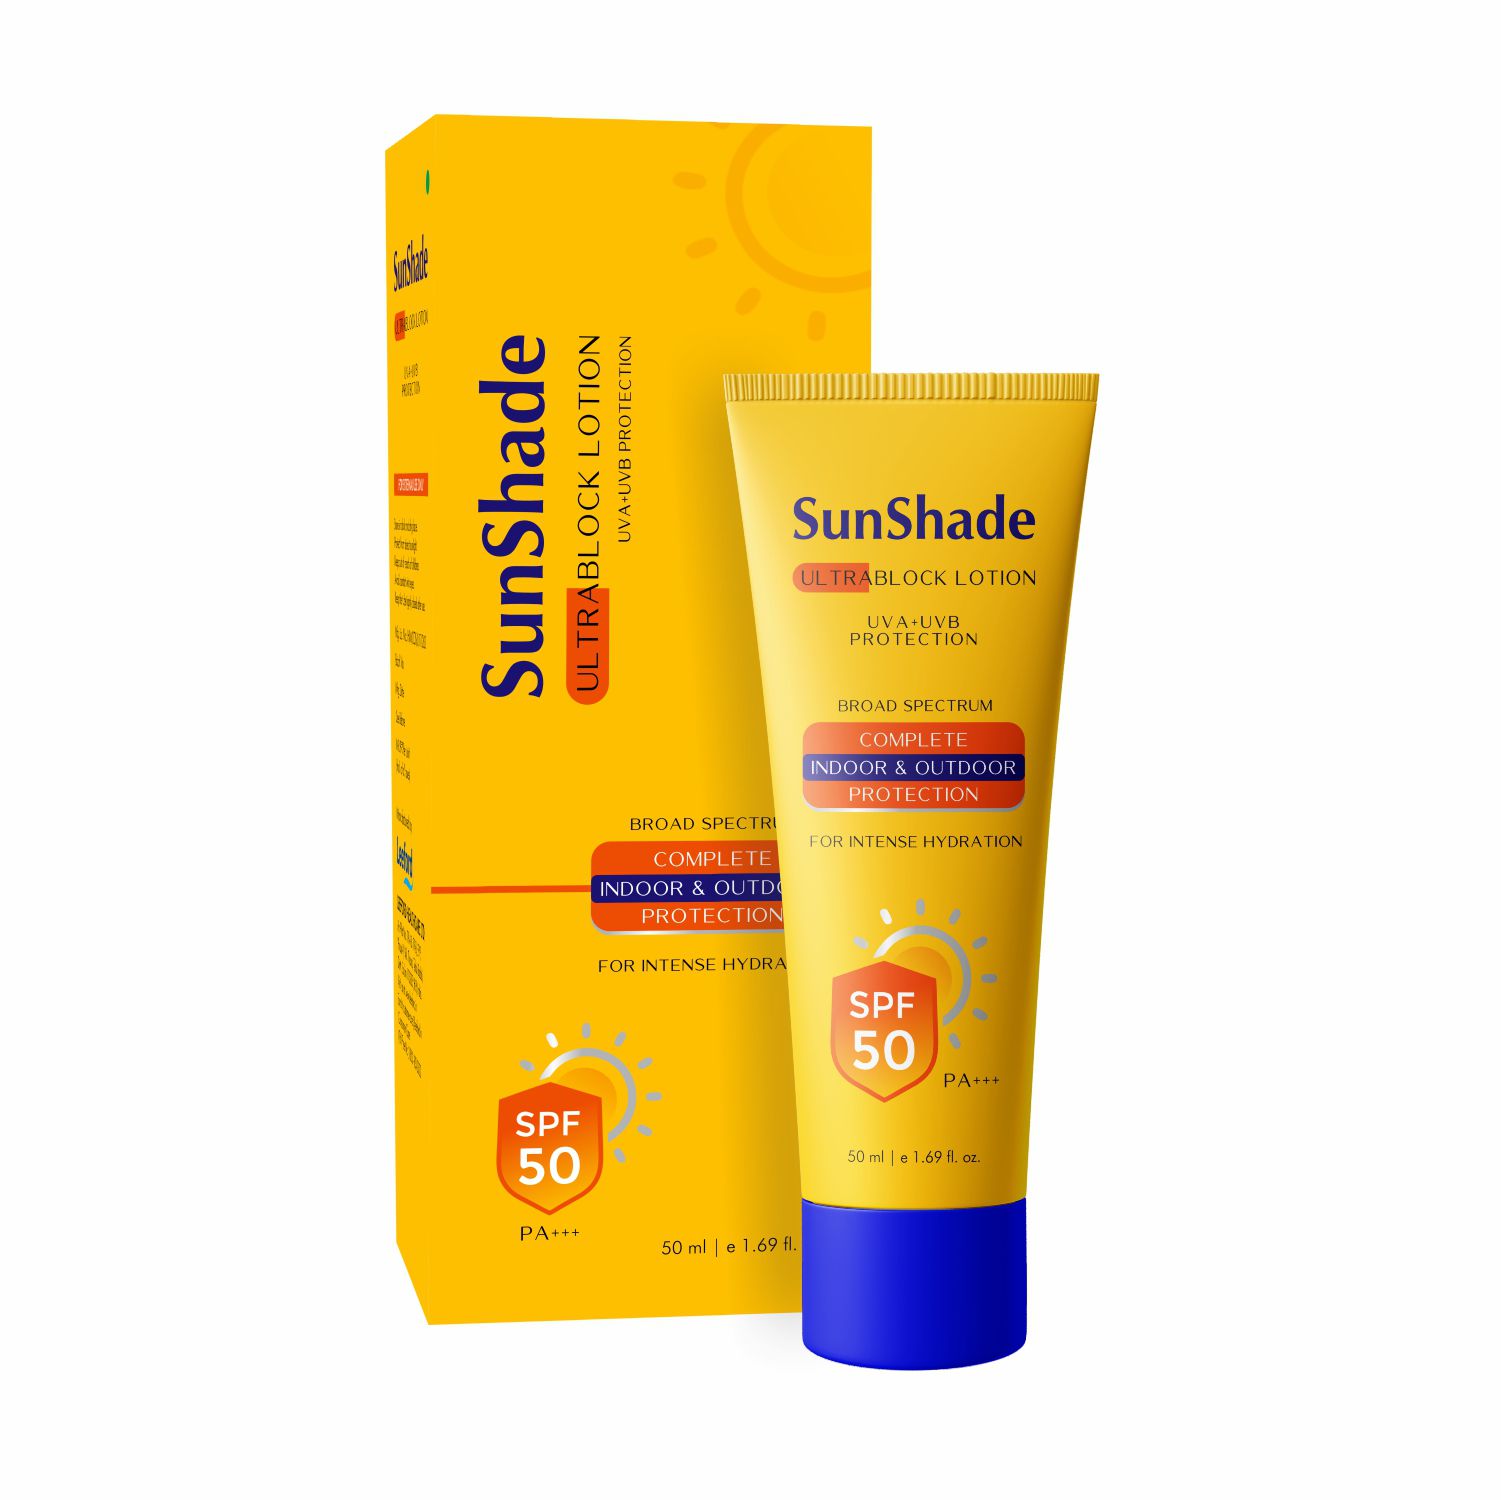     			Leeford Sunshade Ultra Block Sunscreen Lotion|UVA+UVB & Broad Spectrum Protection-SPF 50 PA- 50 ml